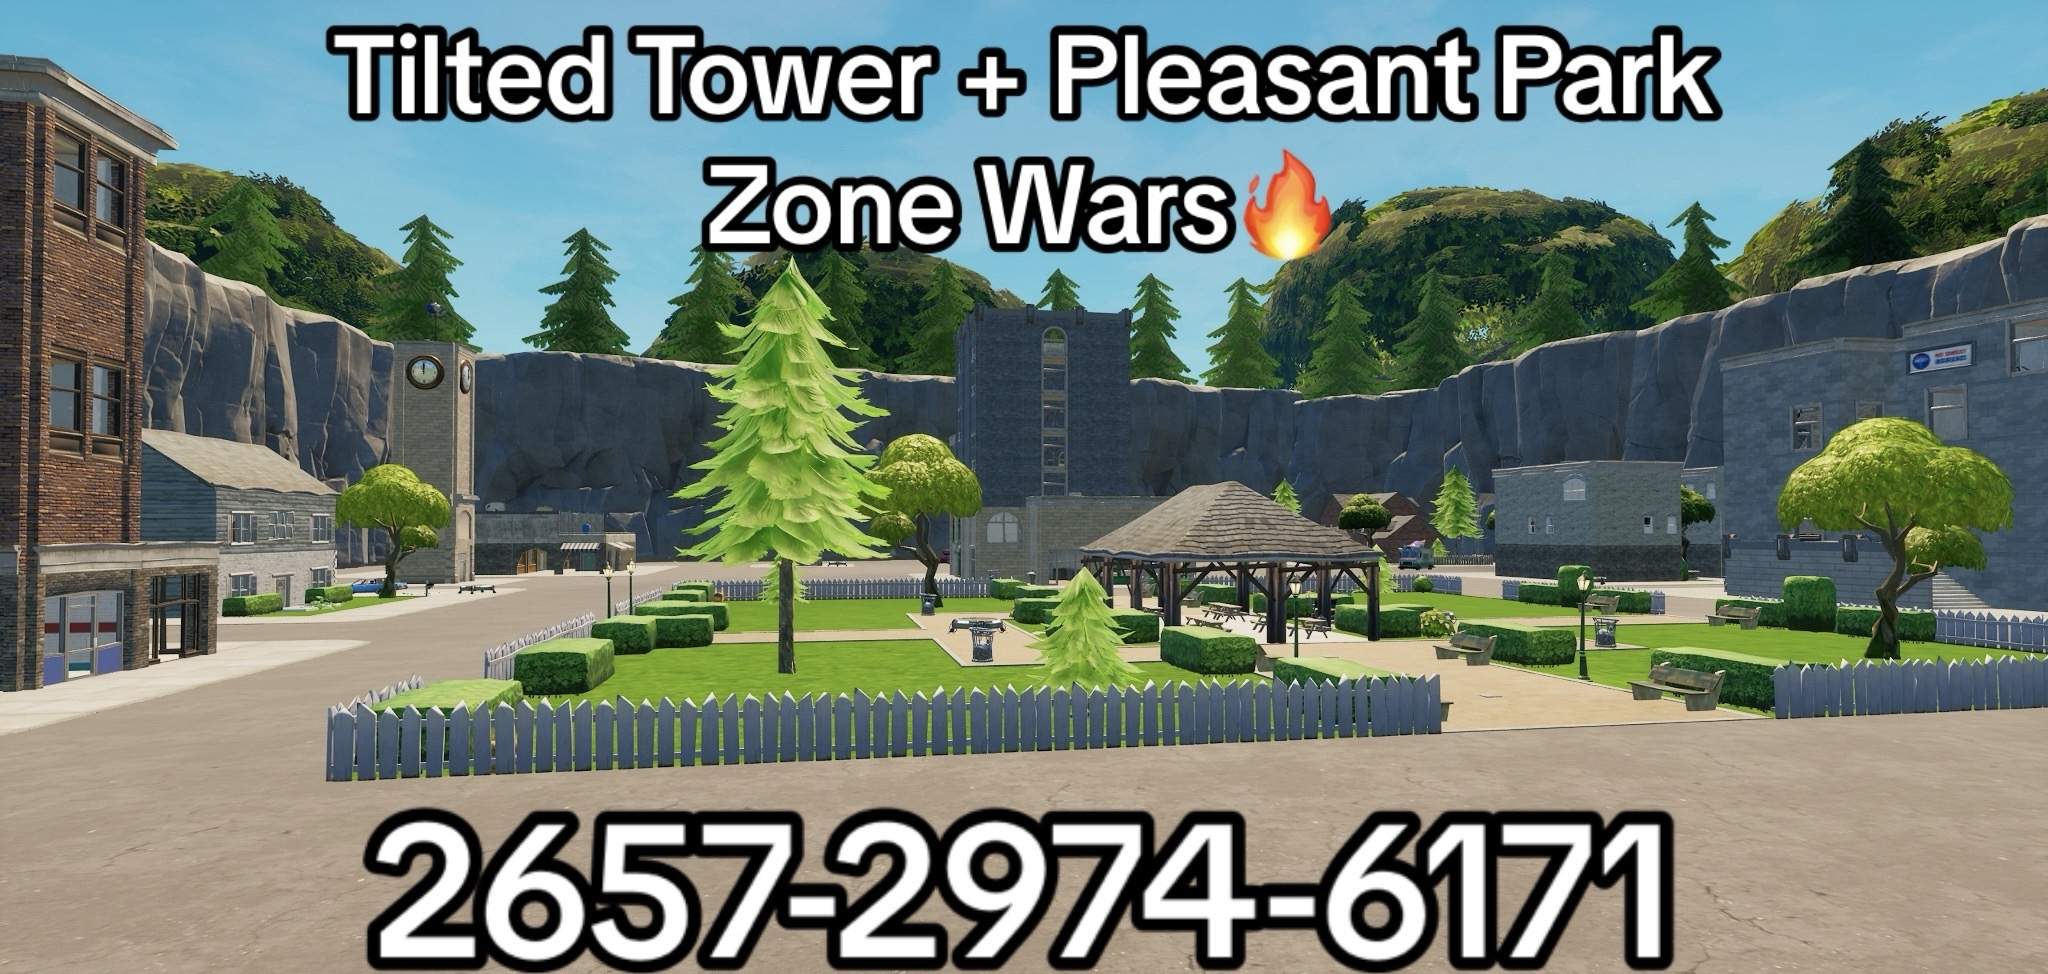 PLEASANT TOWER ZONE WARS 💥 image 2